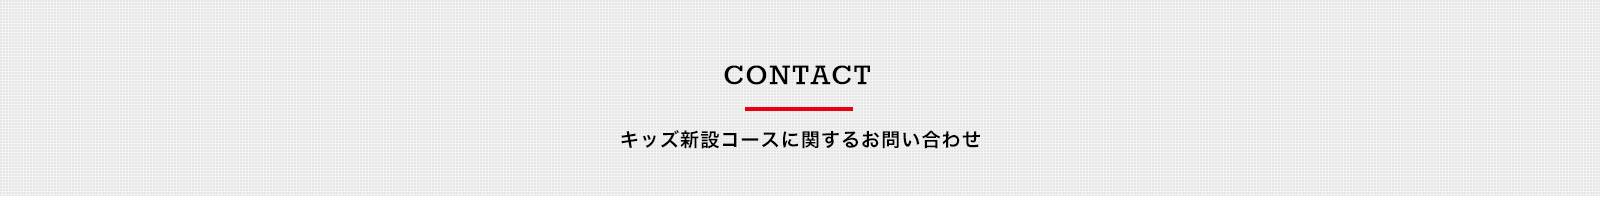 contact_top_banner